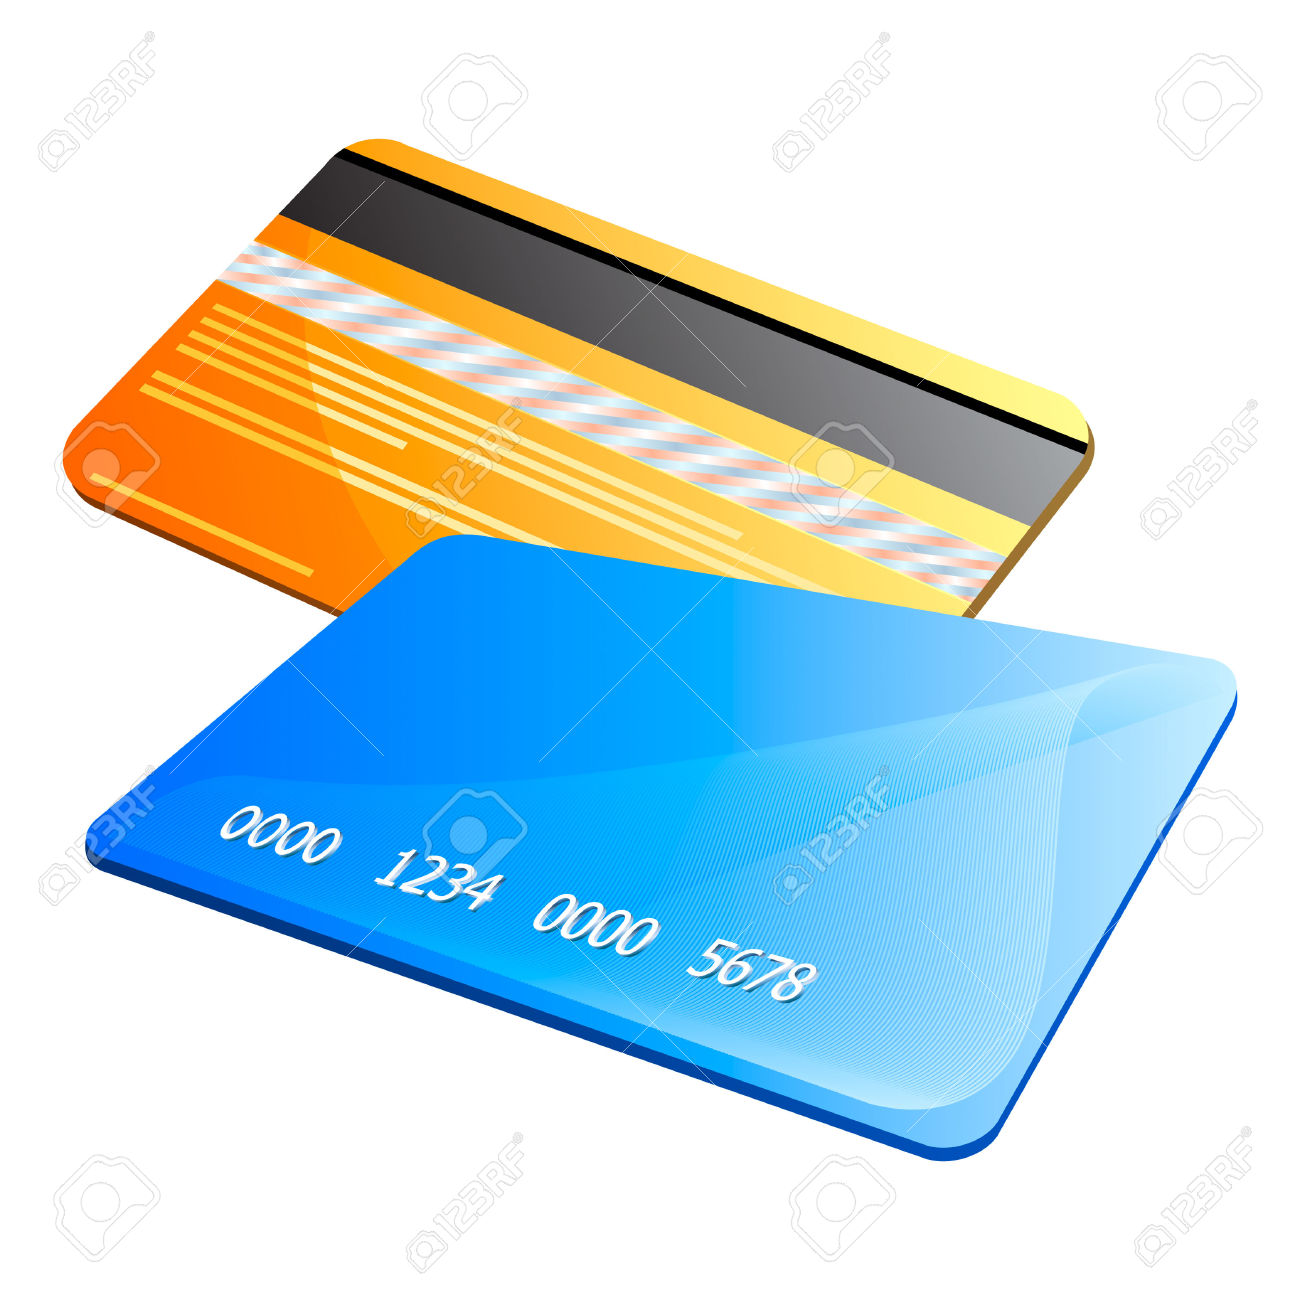 Visa credit card clipart 